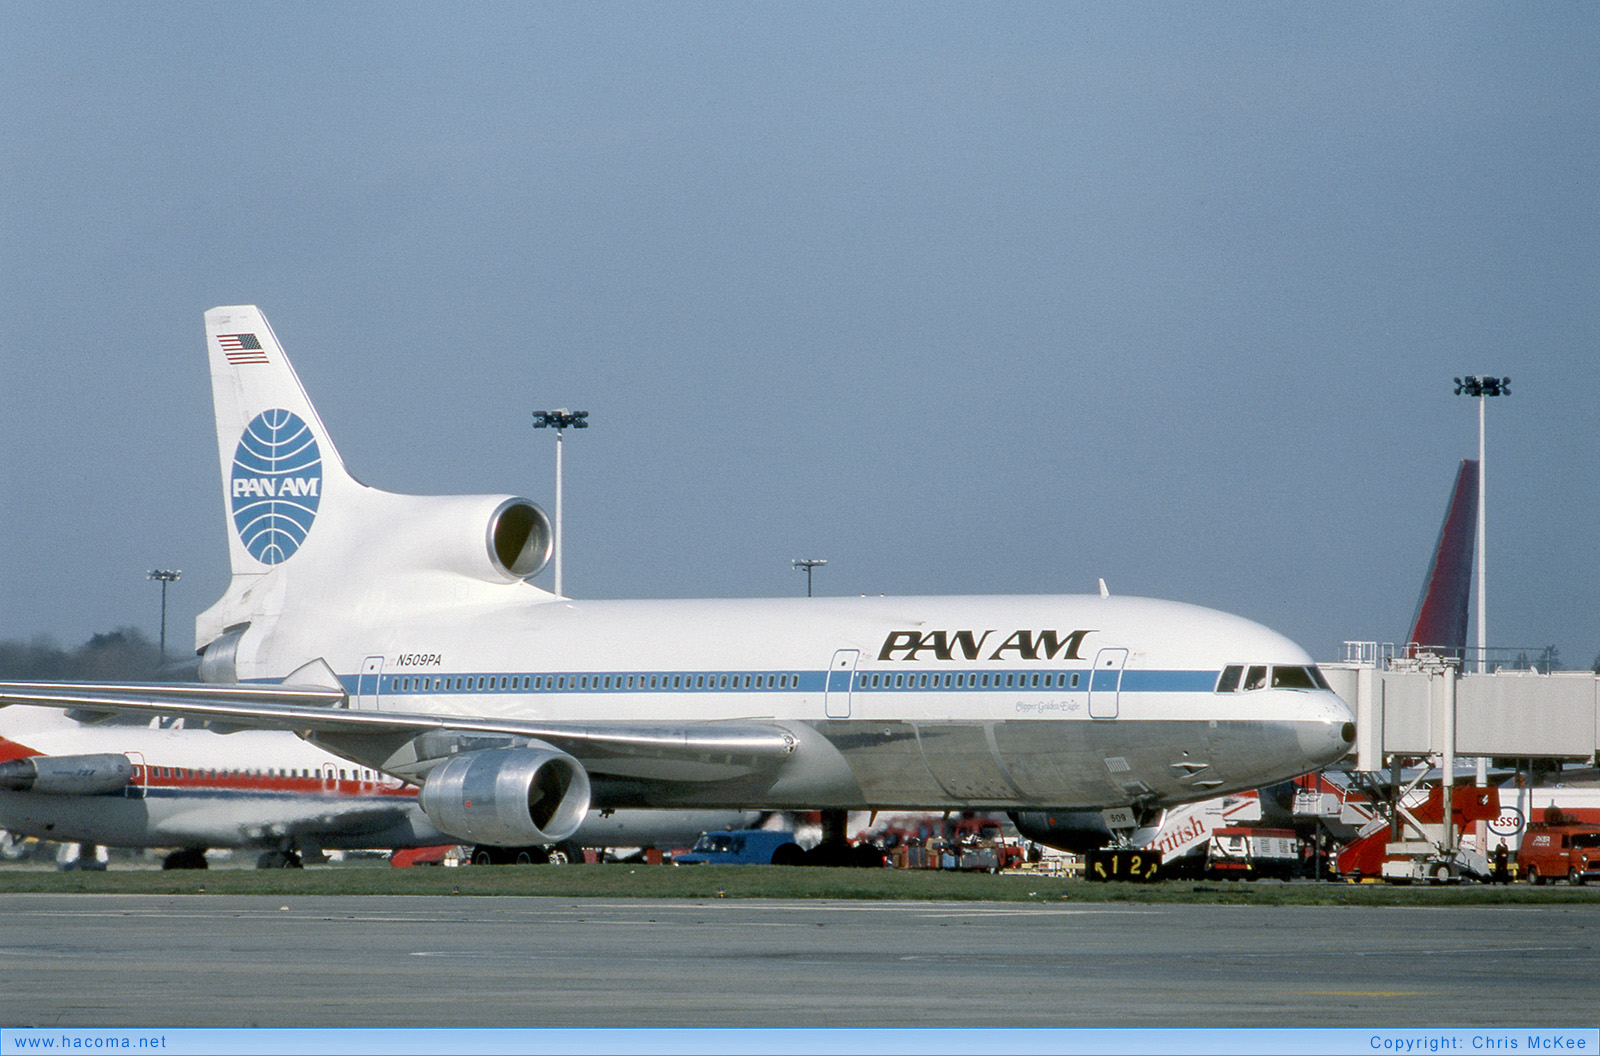 Foto von N509PA - Pan Am Clipper Golden Eagle - Gatwick Airport - 28.03.1981